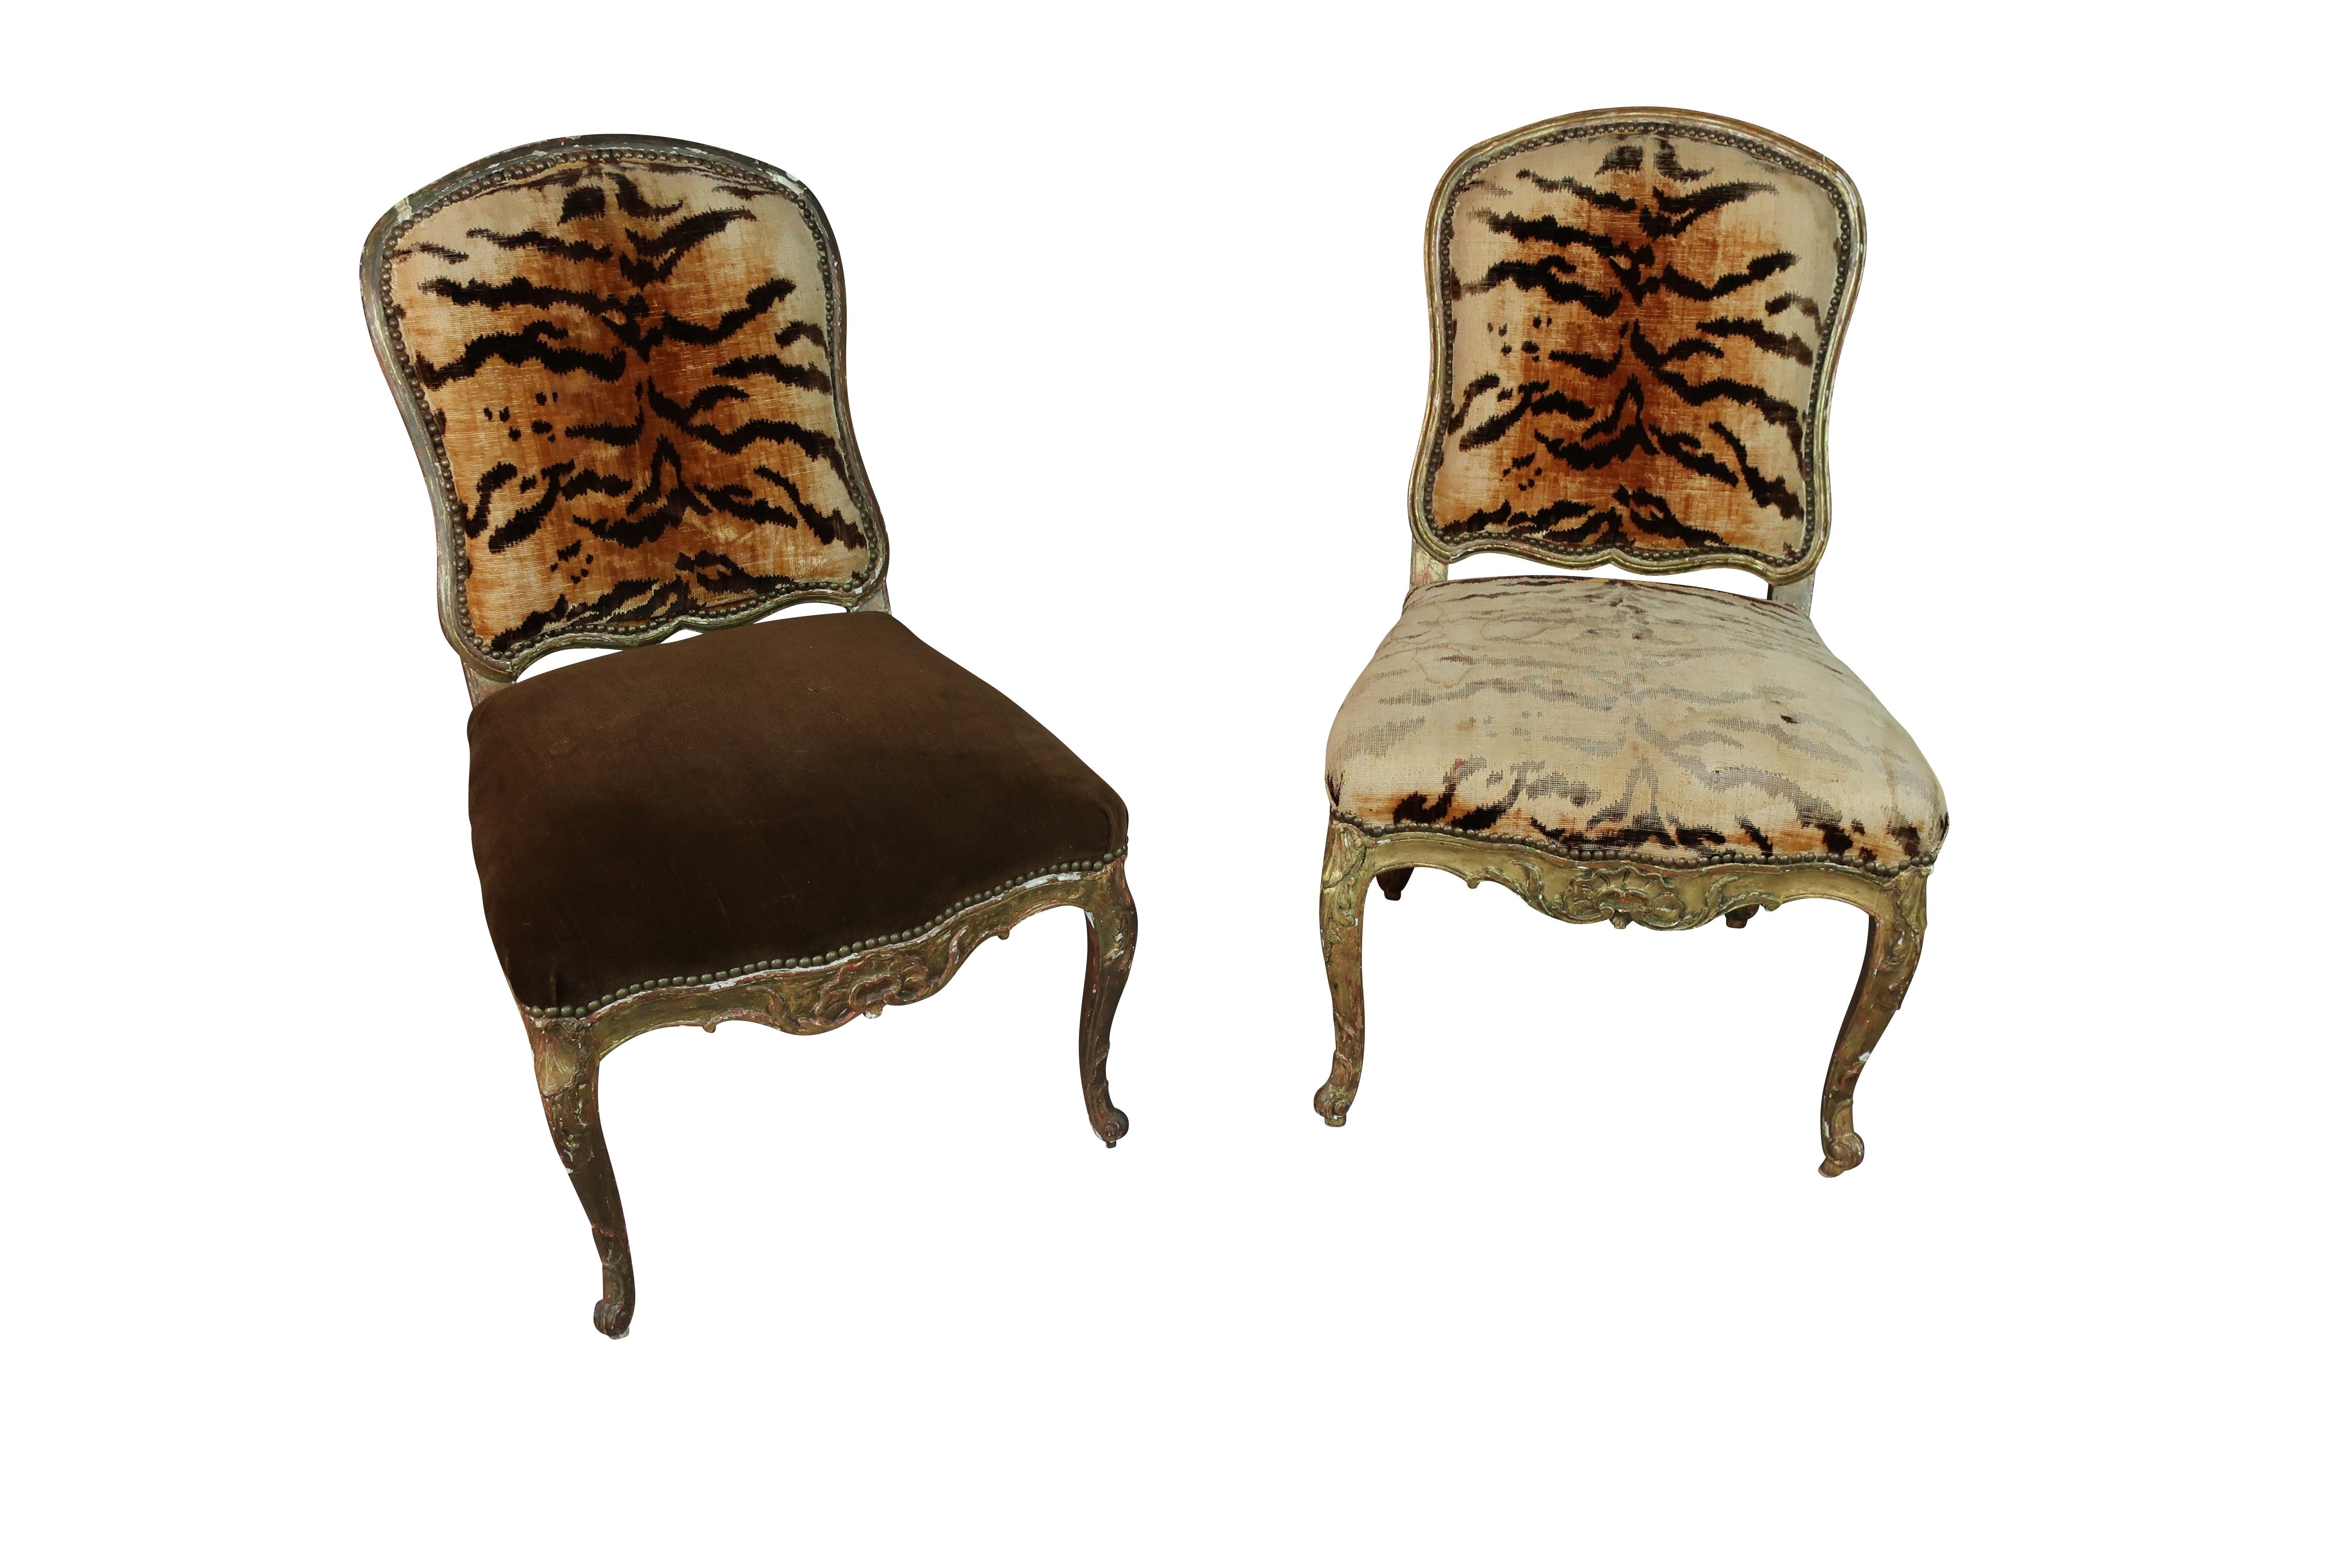 19th Century Italian Hand Carved Florentine Gilt Chairs with Original Animal Print Fabric